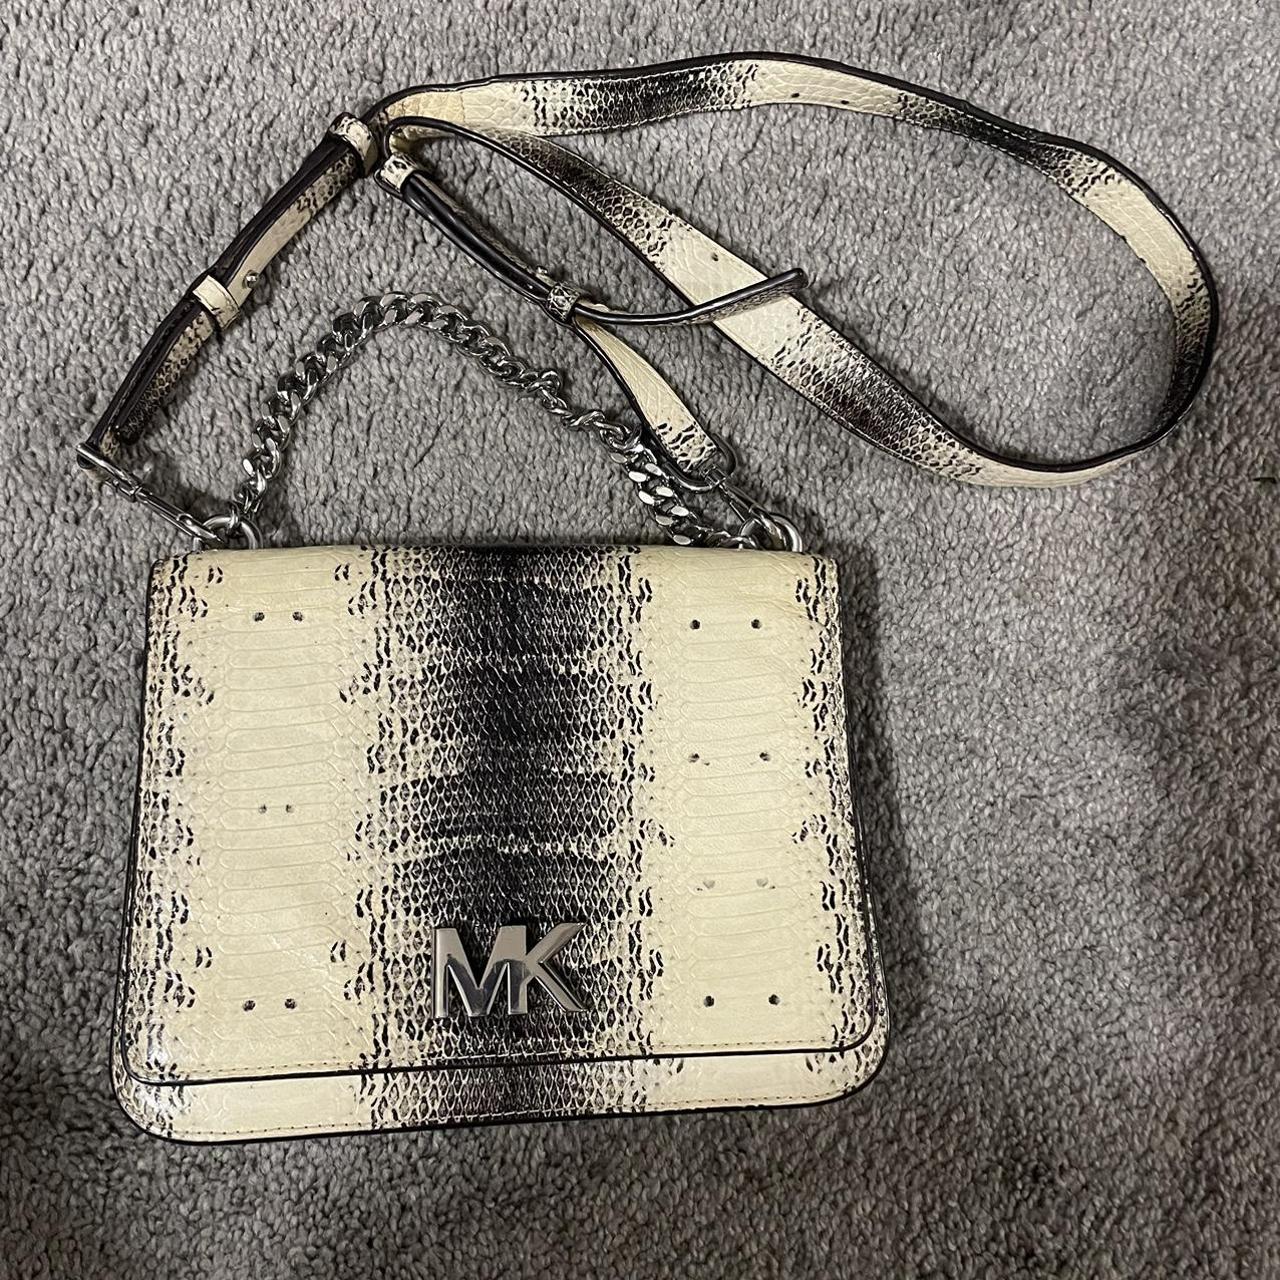 Authentic Michael Kors leather “snake-skin” effect handbag | Michael kors  shoulder bag, Micheal kors bags, Black leather handbags